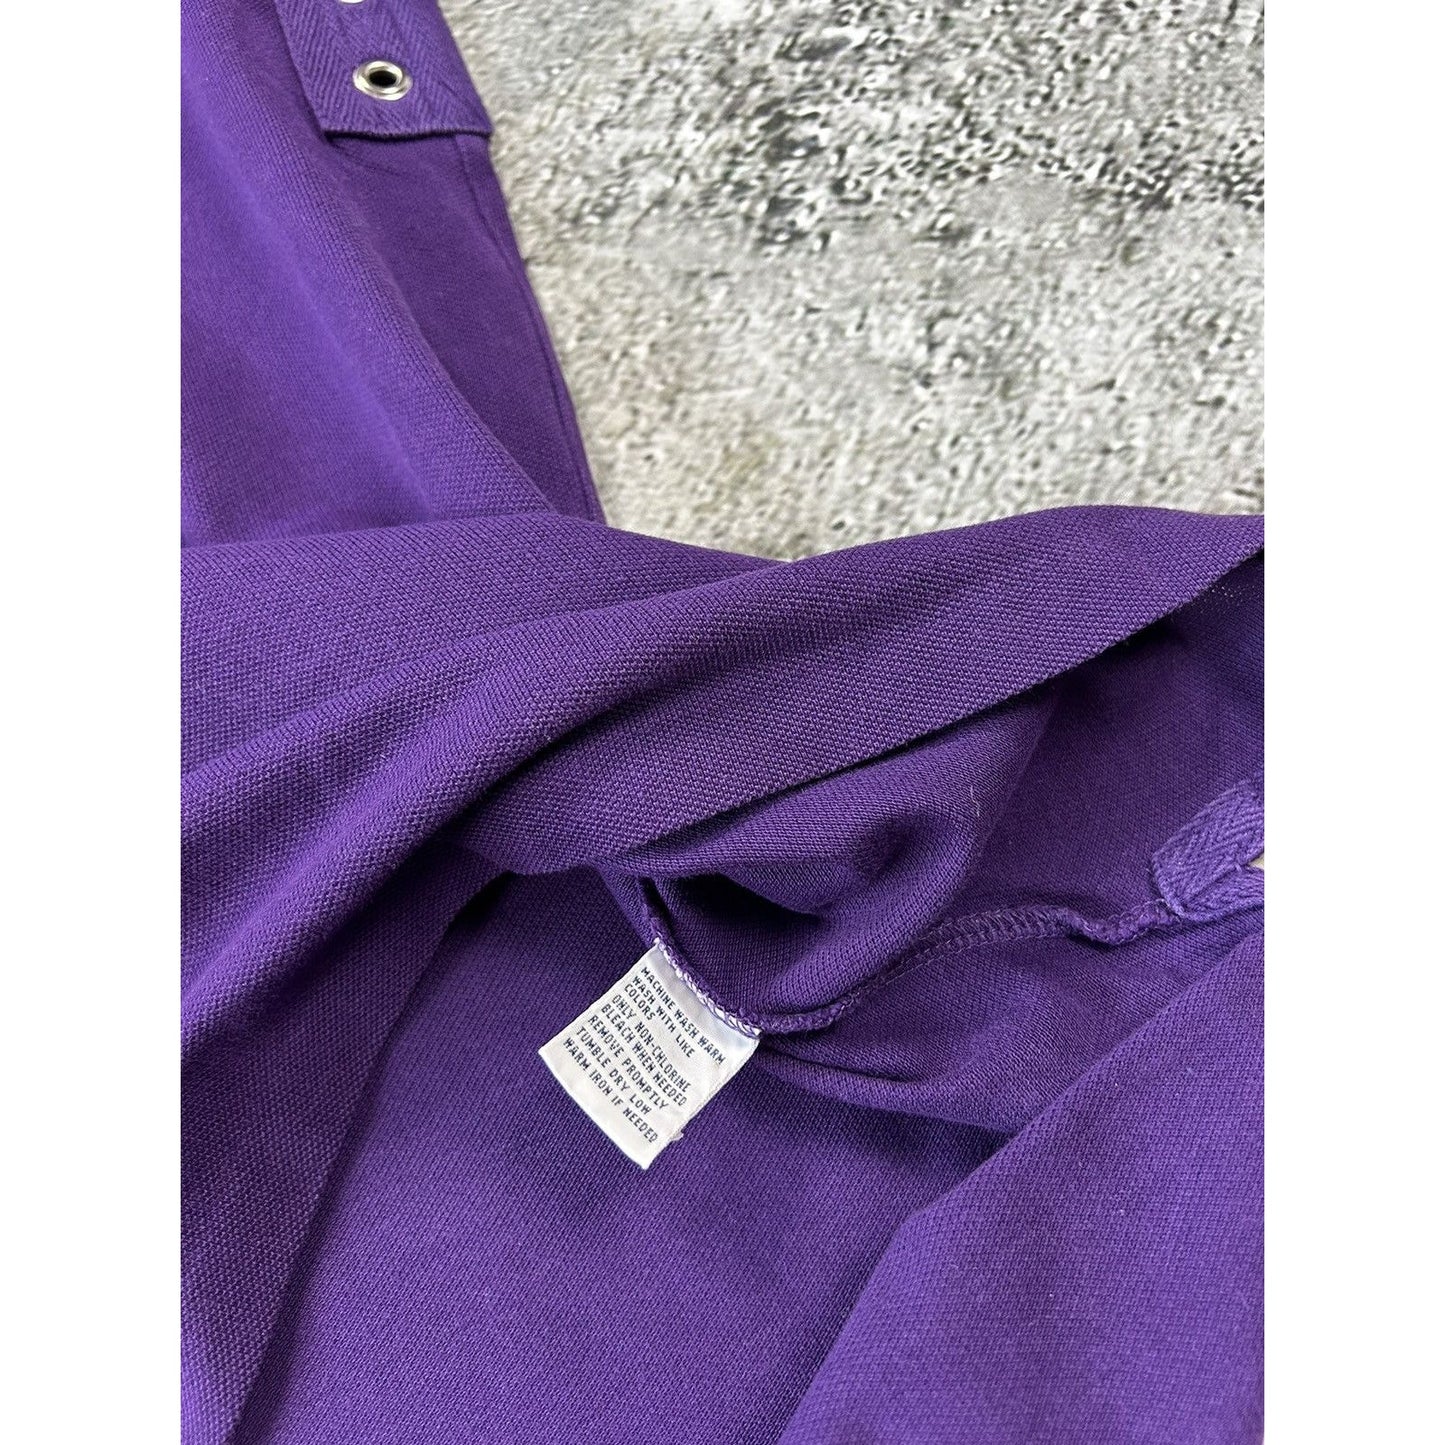 Chief Keef Polo Ralph Lauren London Polo T-shirt purple vintage